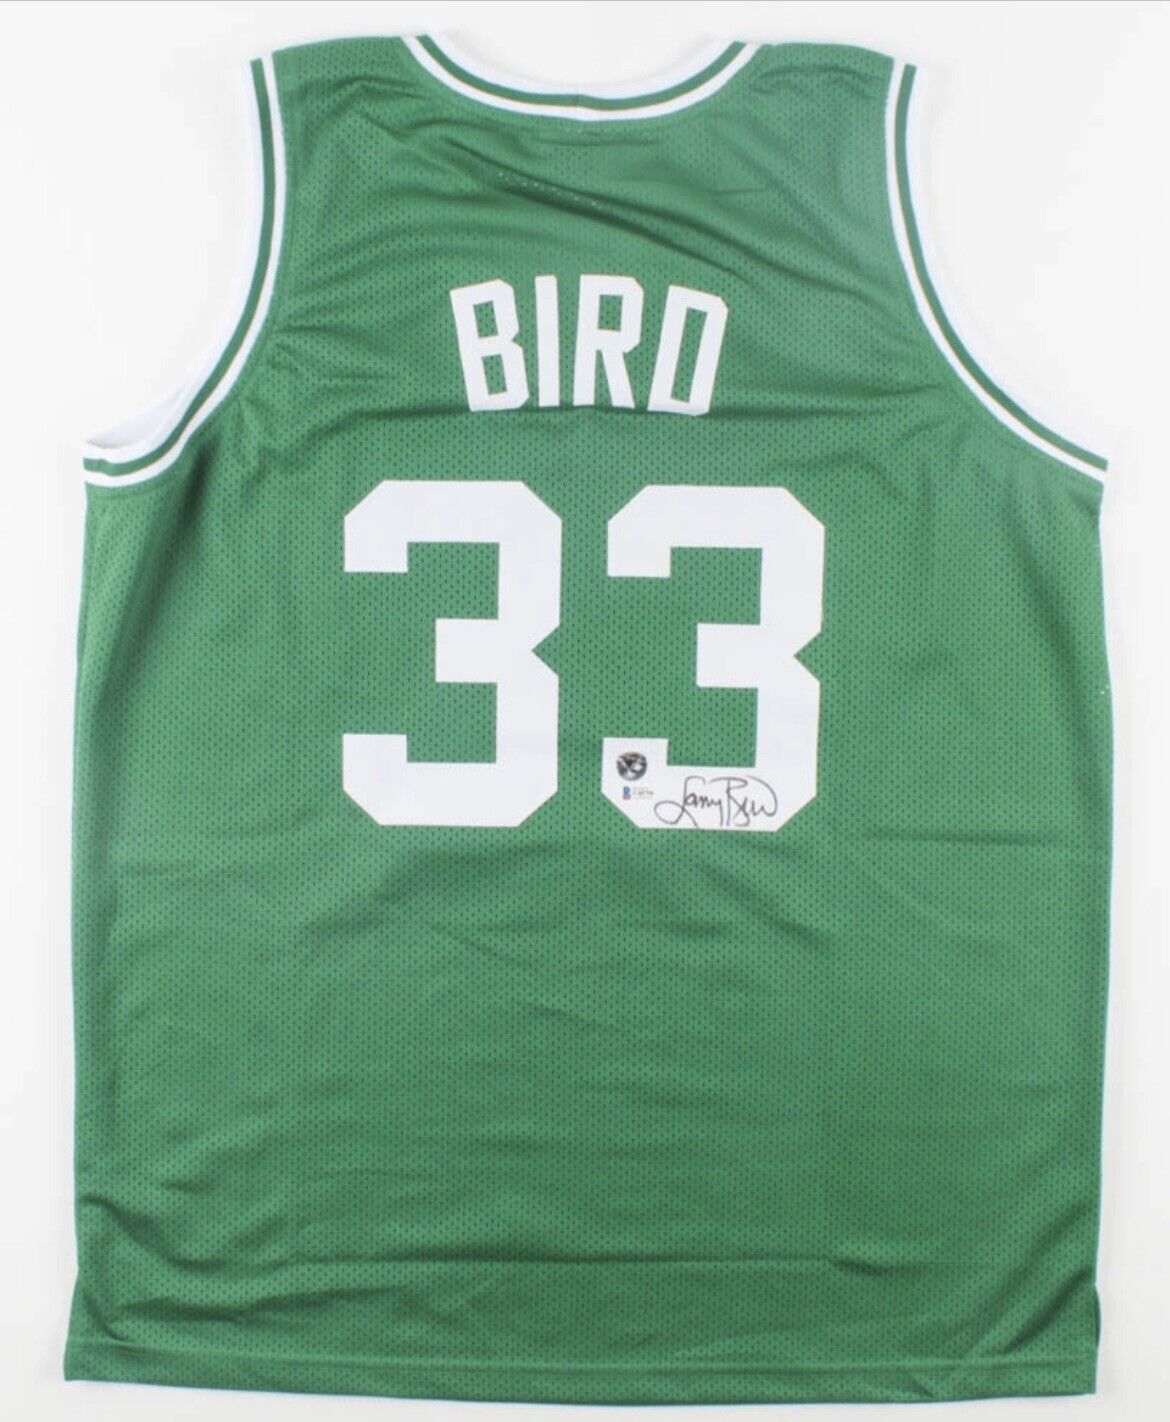 Larry Bird Autographed Signed #33 Boston Celtics Xl Green Jersey With Beckett COA-Bird Hologram